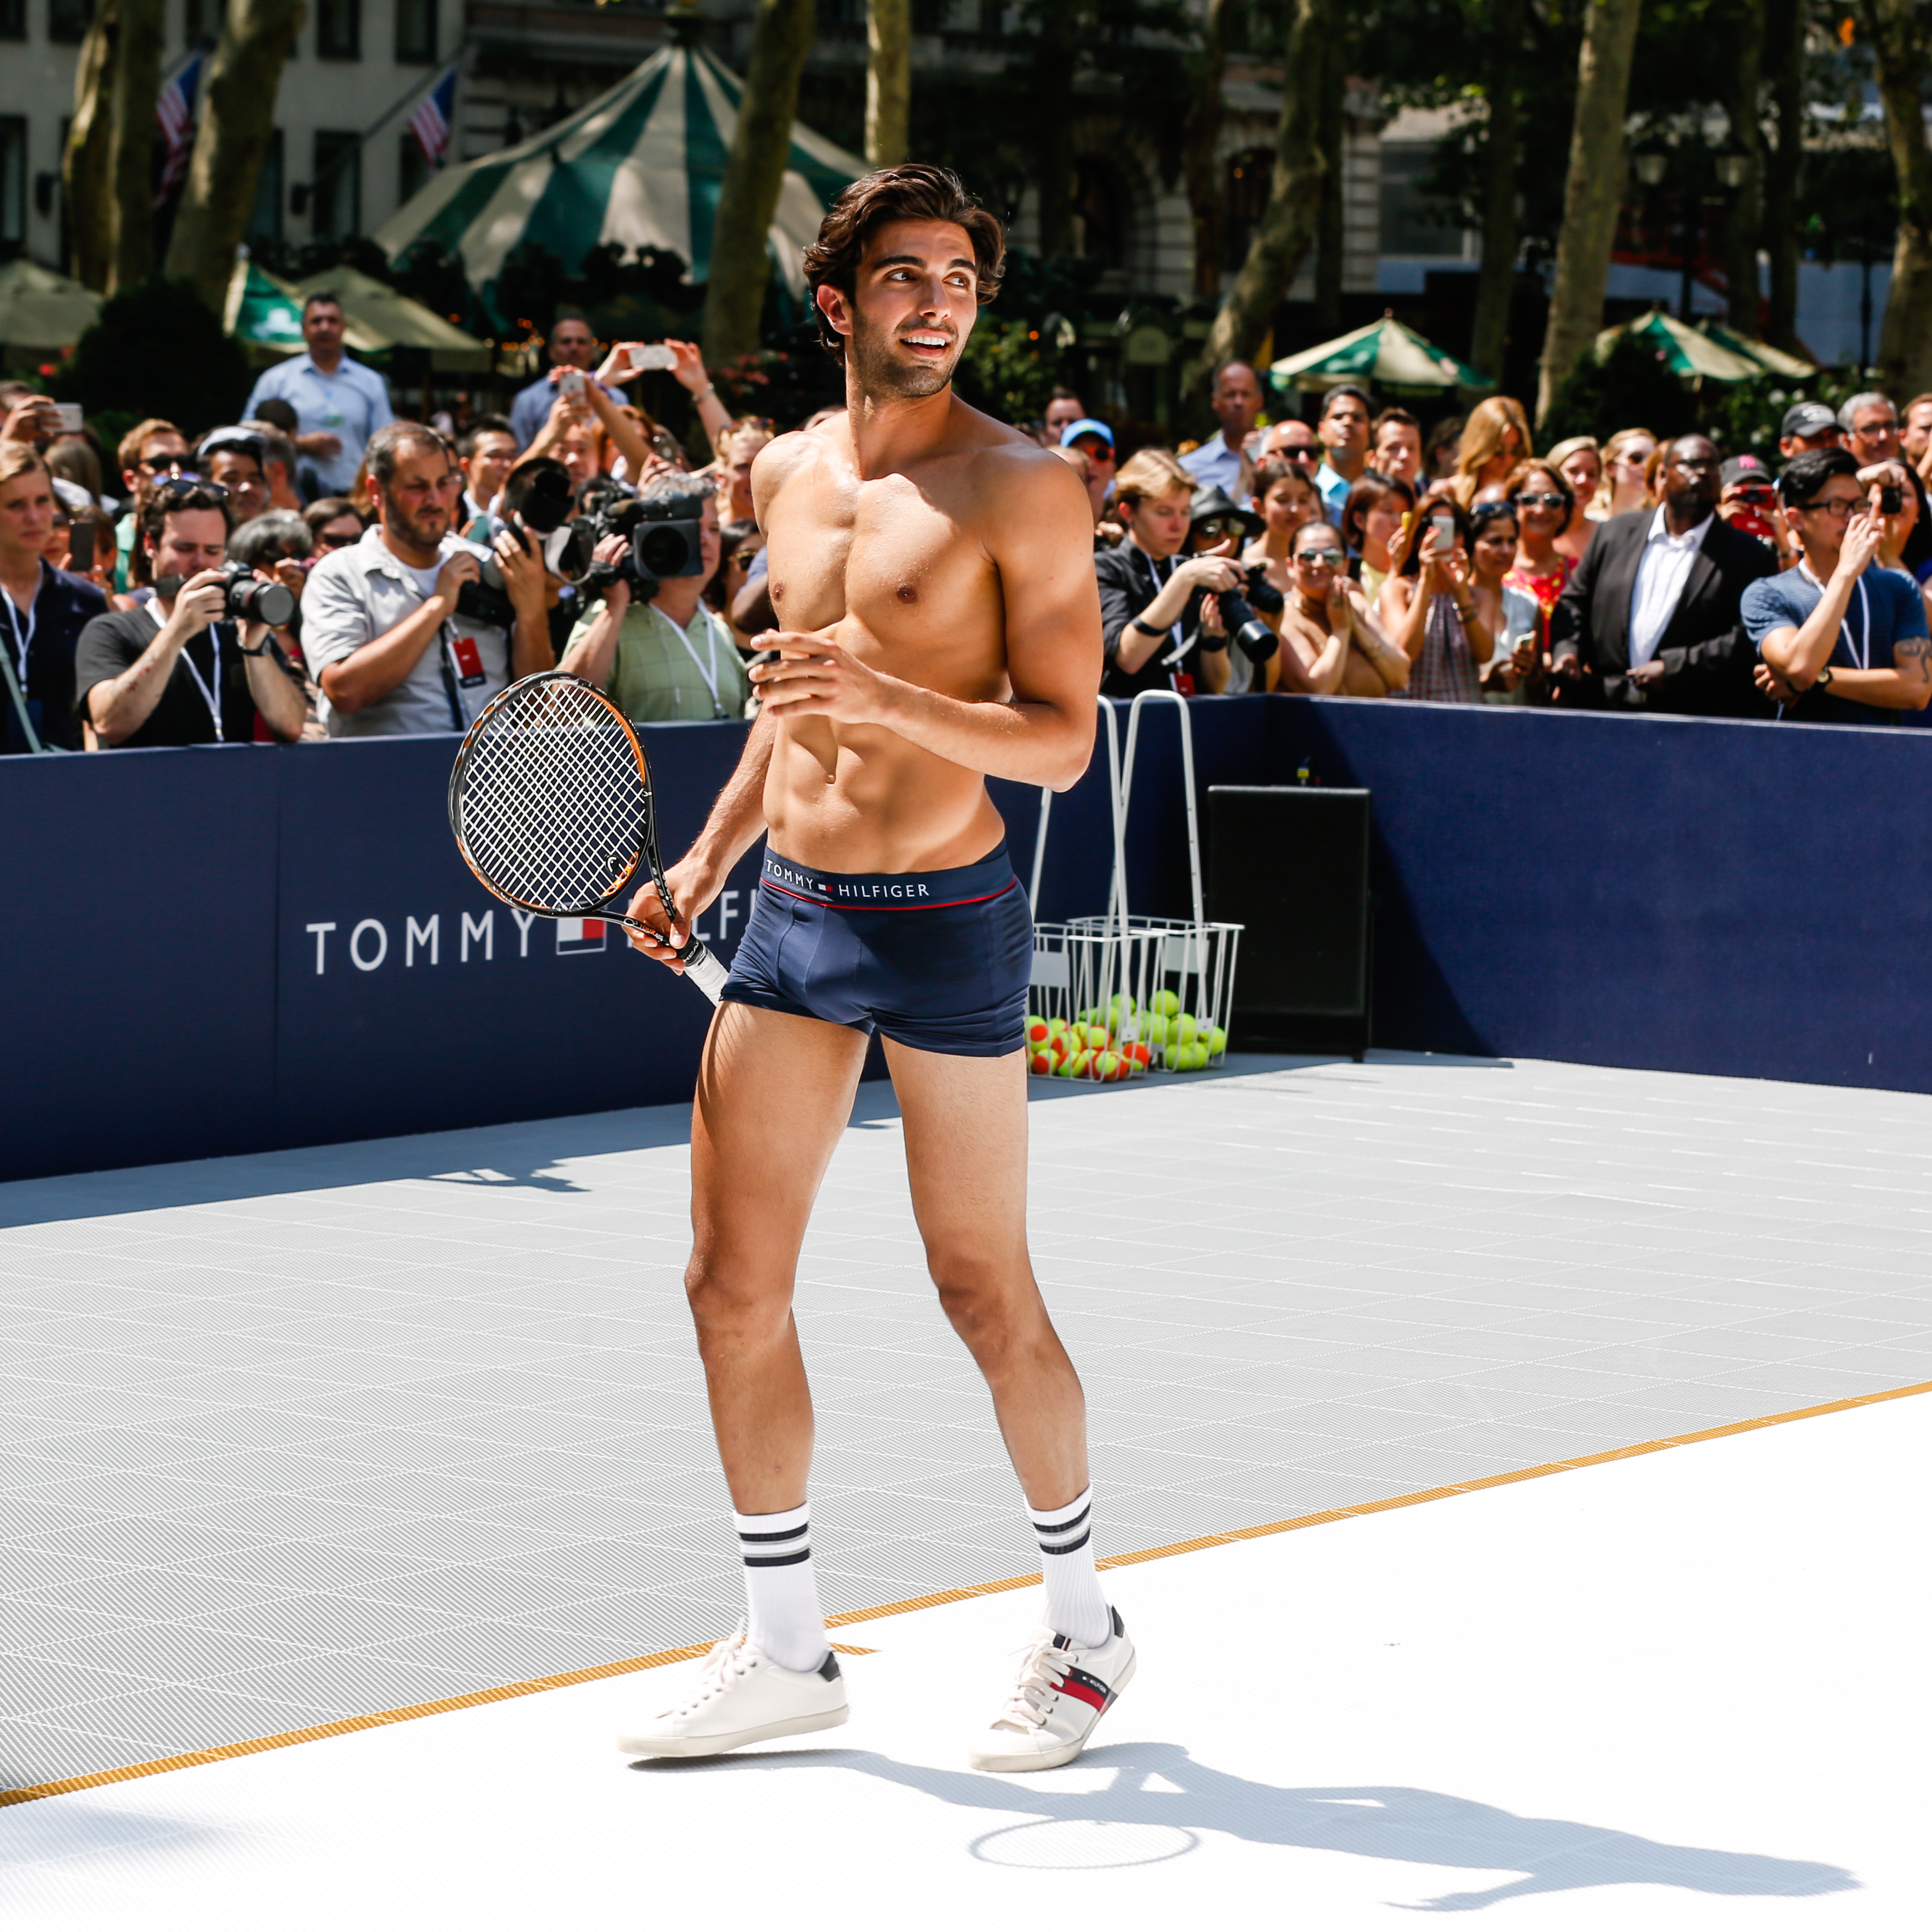 Hilfiger Hosts “Strip Tennis” To Rafael Nadal